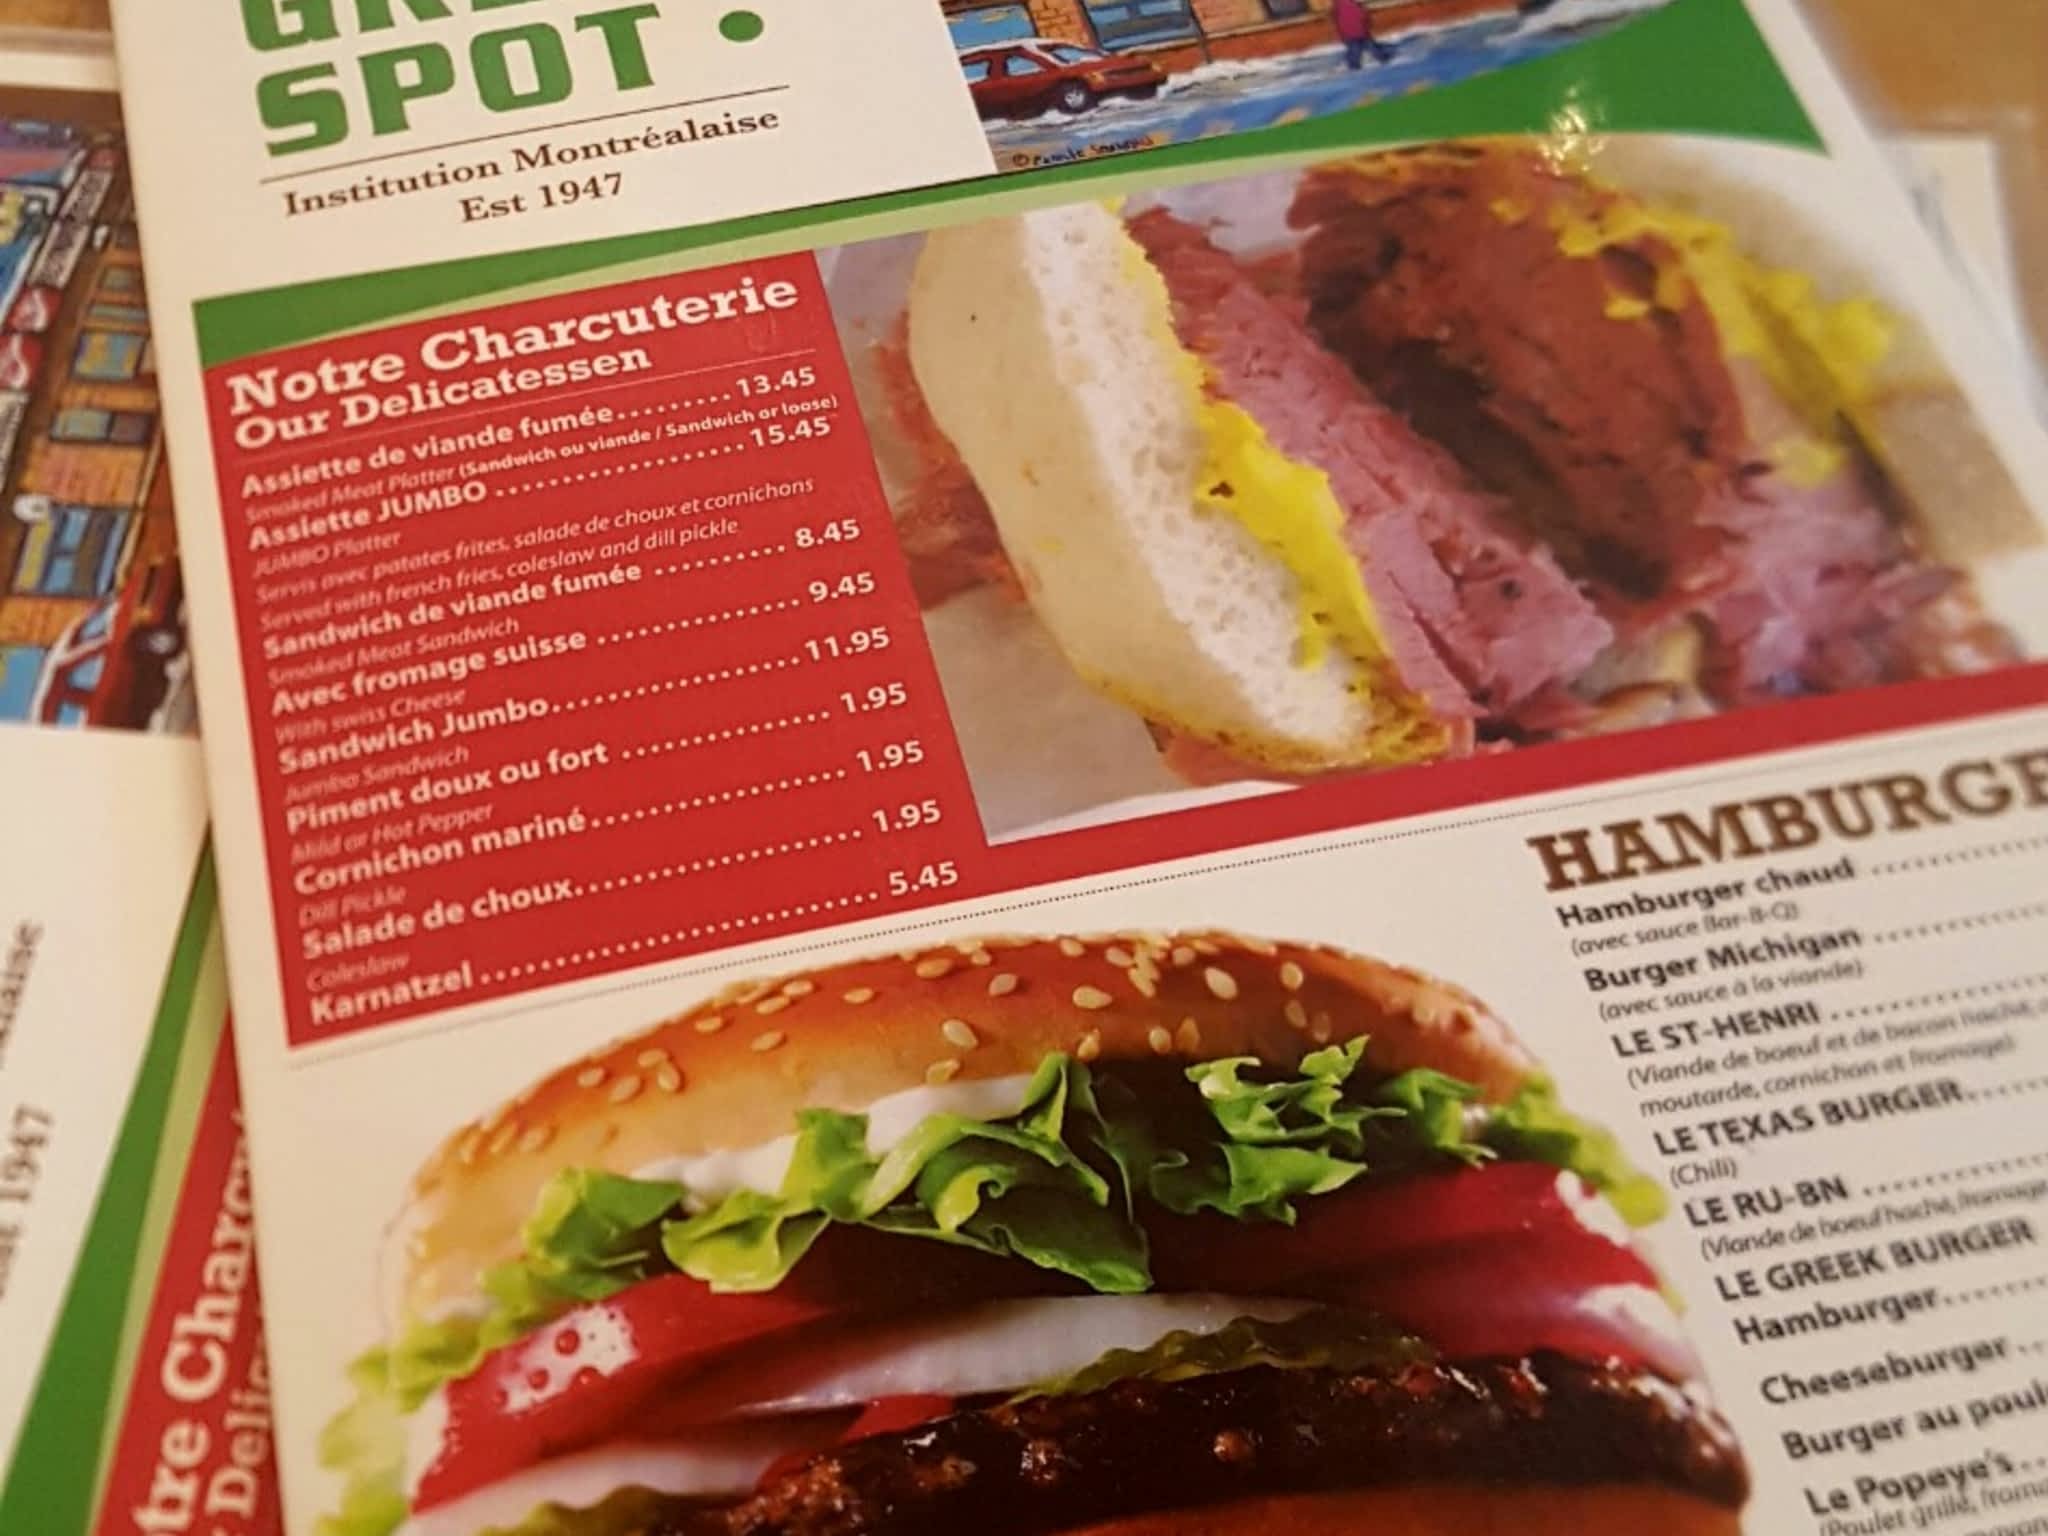 photo Greenspot Restaurant - Smoked Meat - Breakfast - Burgers